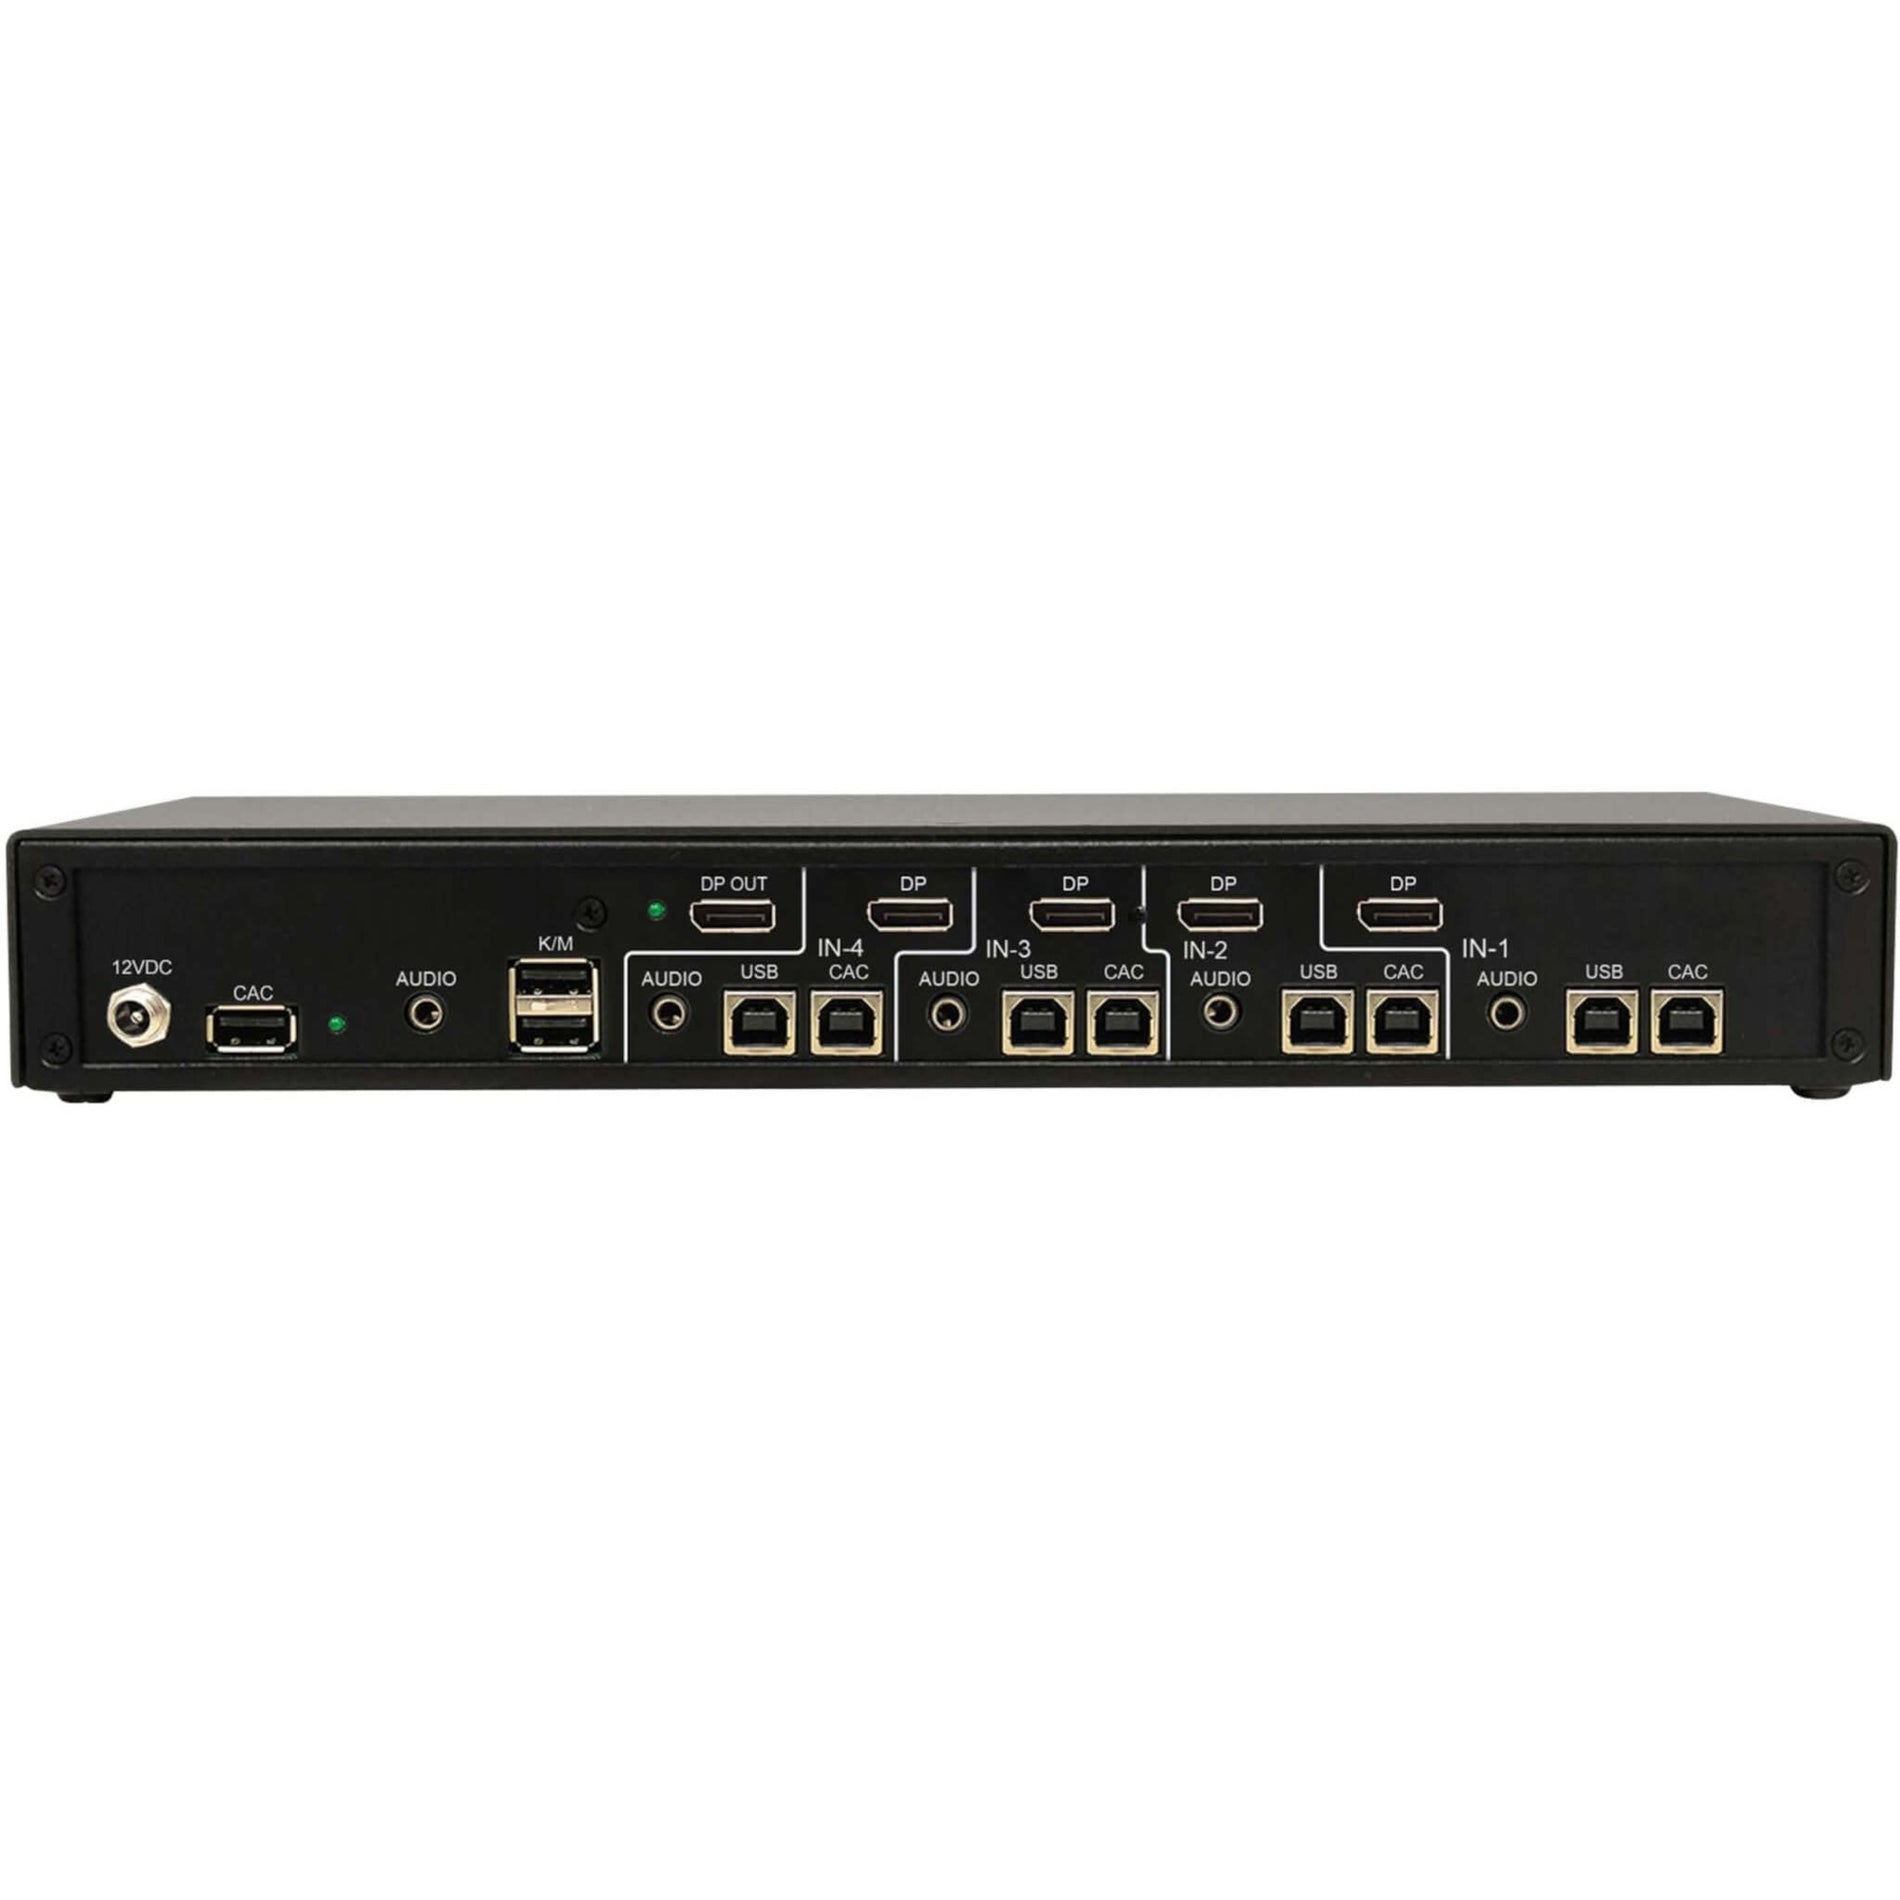 Tripp Lite B002-DP1AC4-N4 KVM Switchbox, 4 Computers Supported, USB, DisplayPort, 3840 x 2160 Resolution, 3 Year Warranty